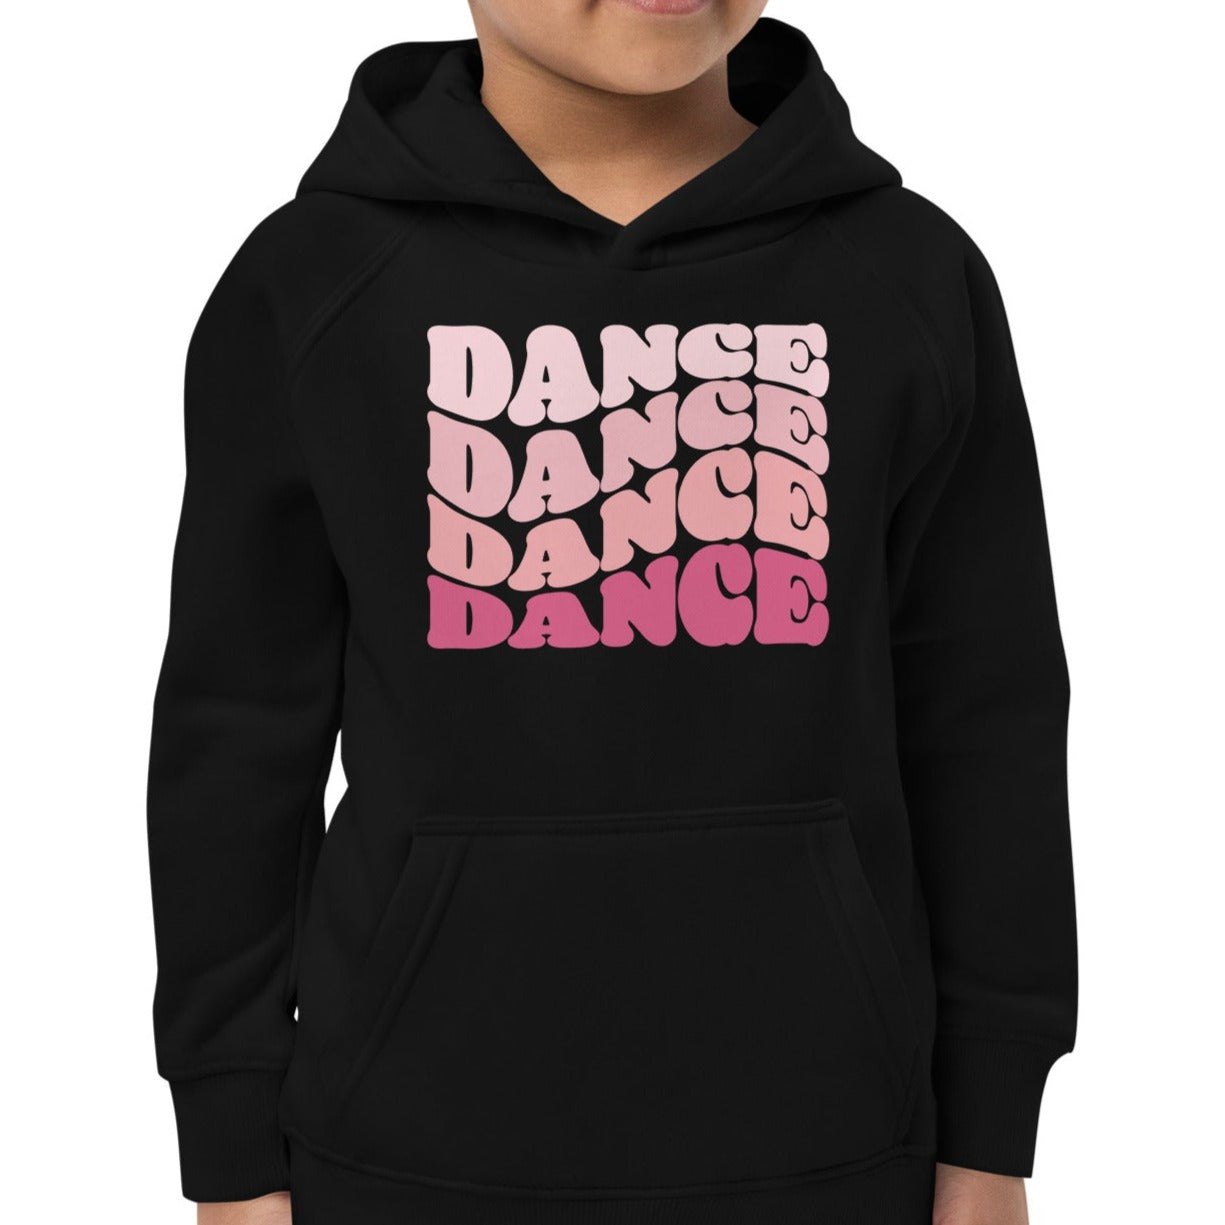 Dance Dance Dance Retro Wave Kids hoodie for your favorite little dancer!